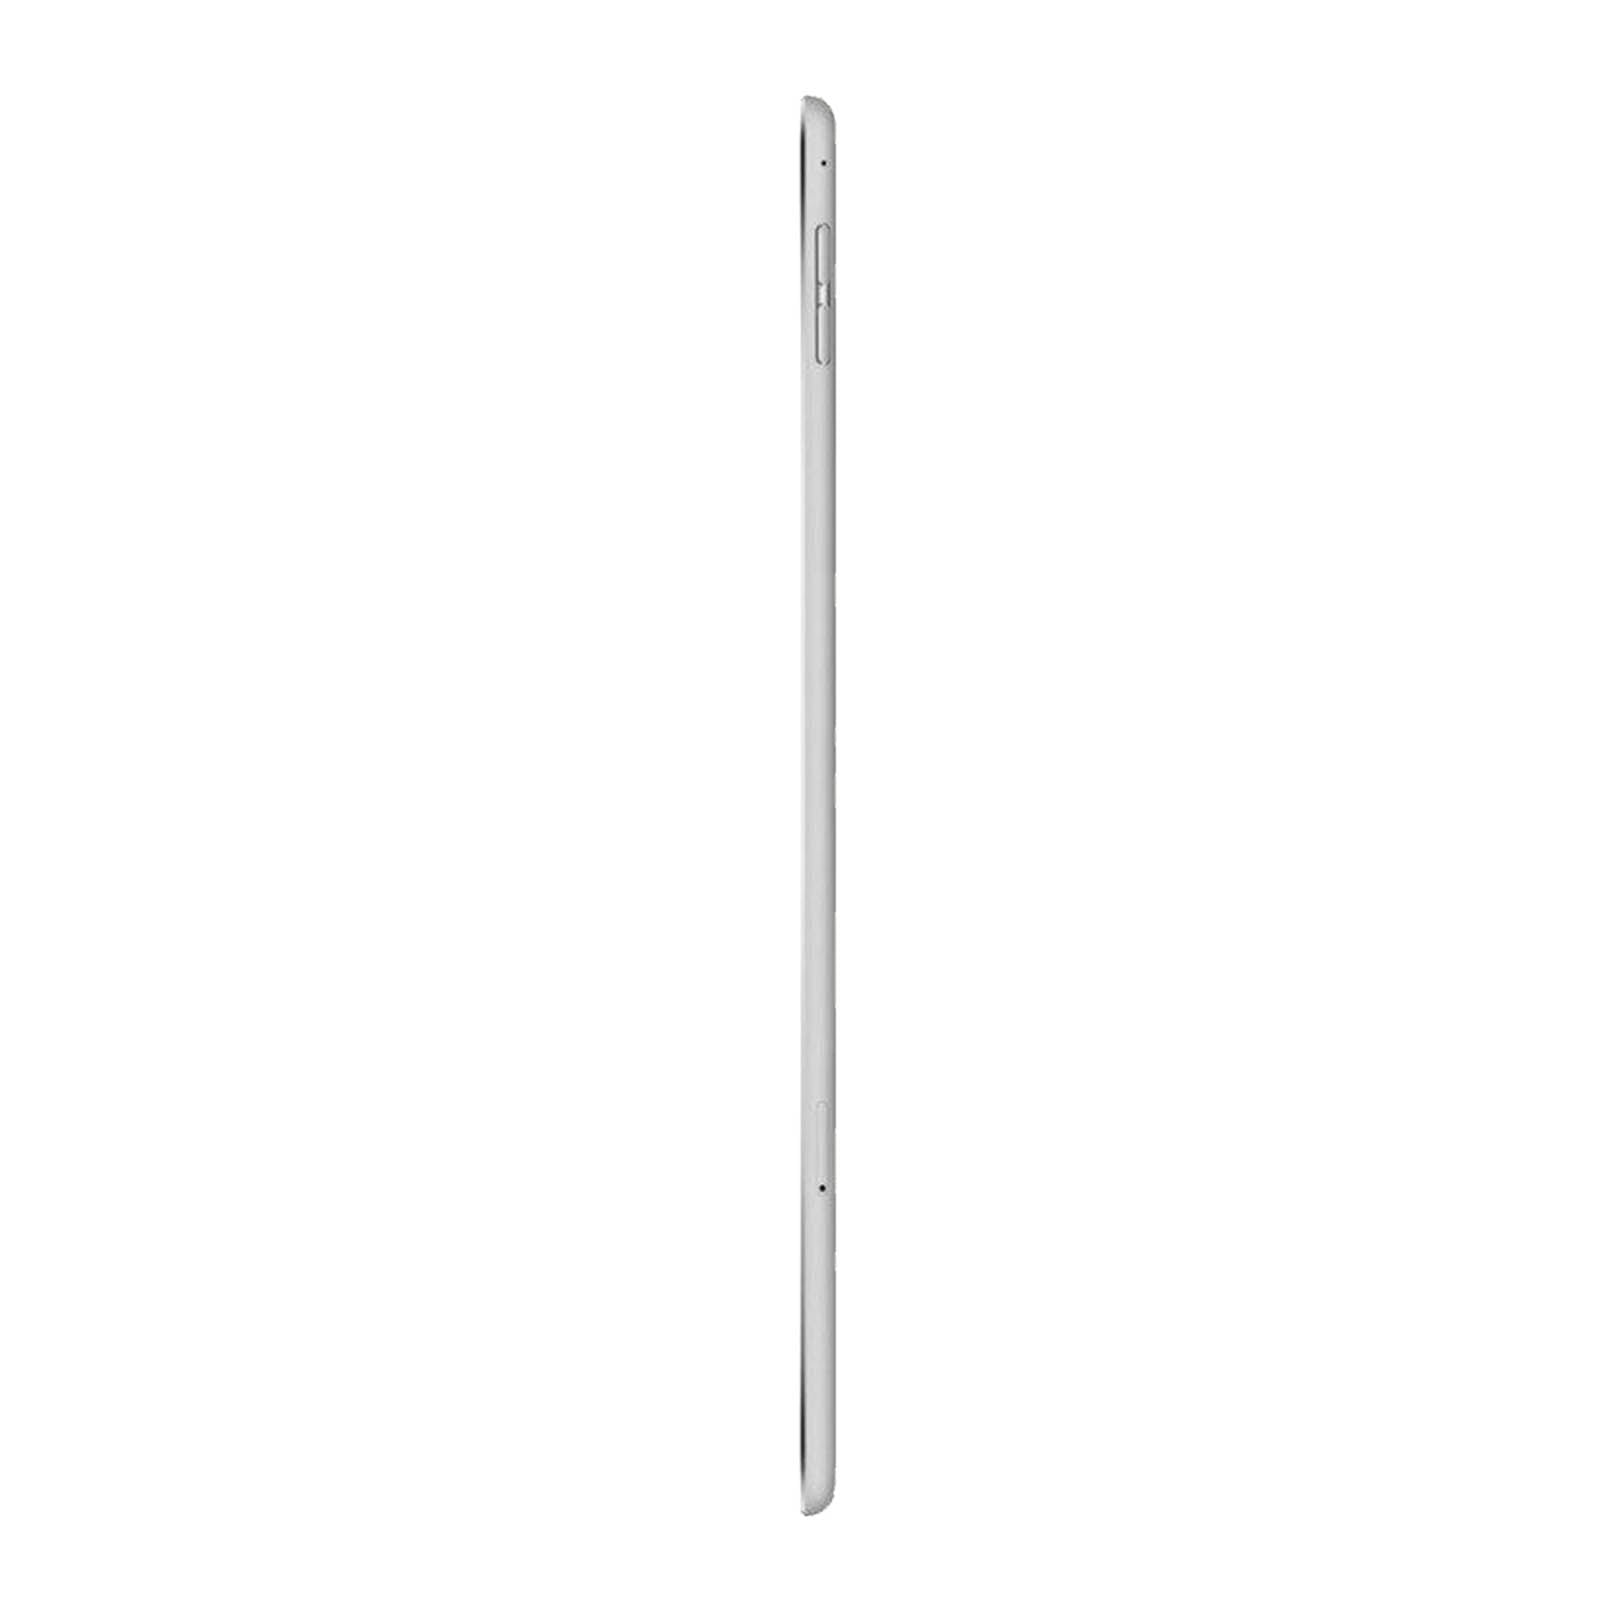 Apple iPad Air 2 16GB WiFi Silver - Pristine